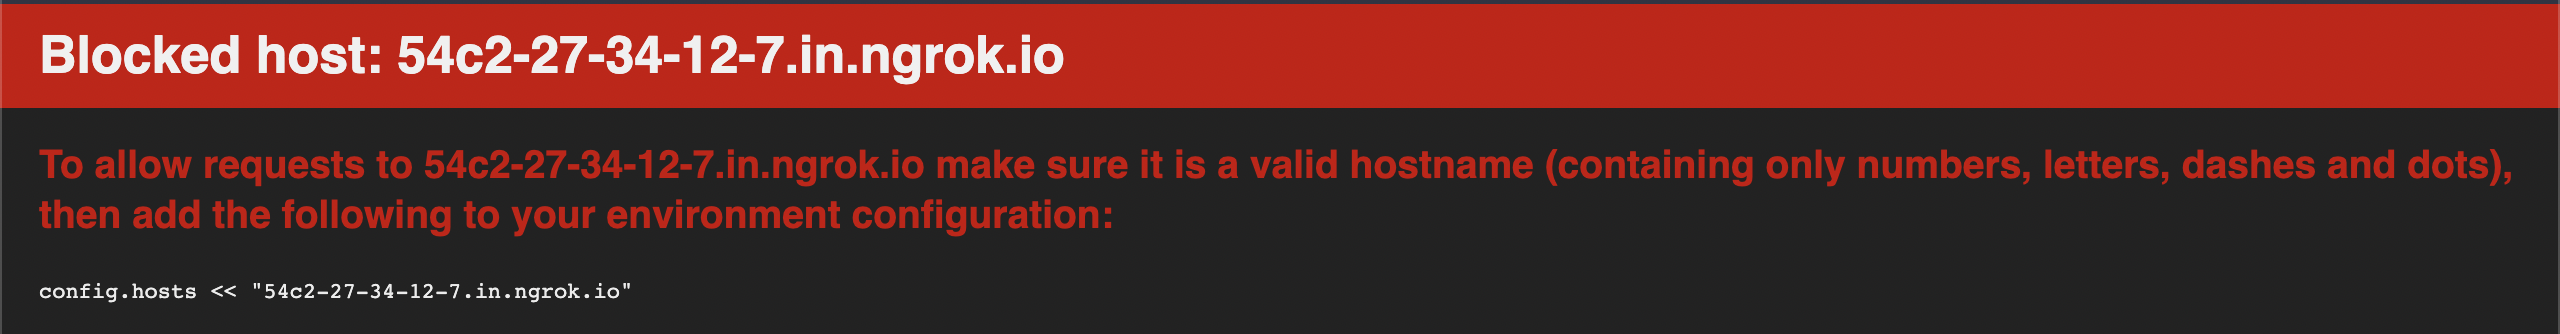 Blocked host error in Rails